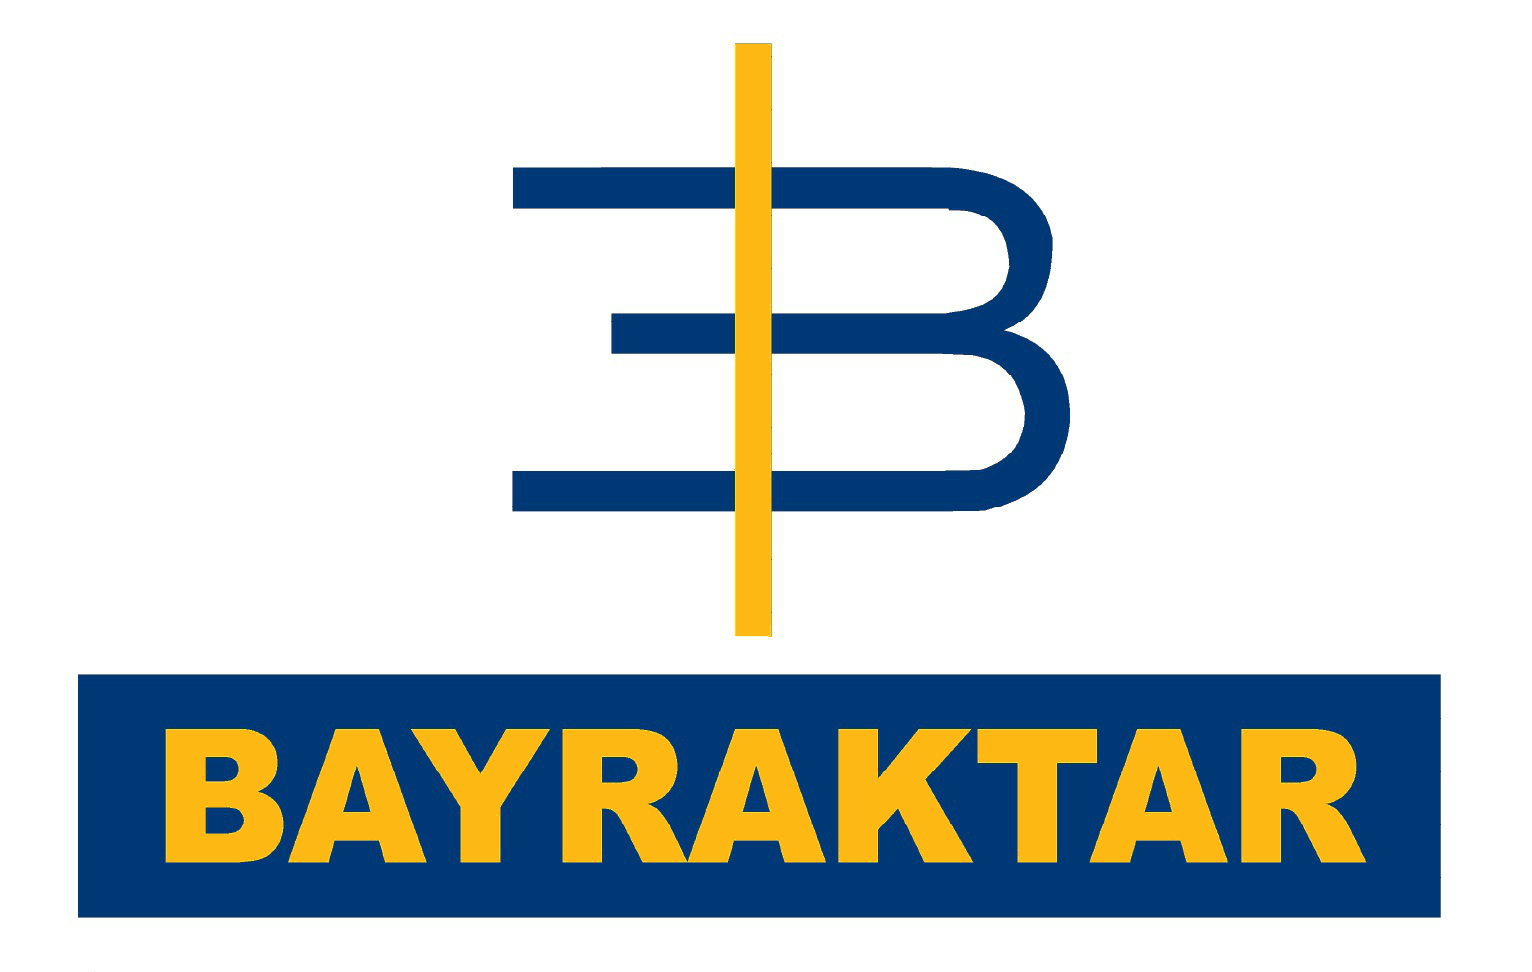 (c) Bayraktargroup.eu